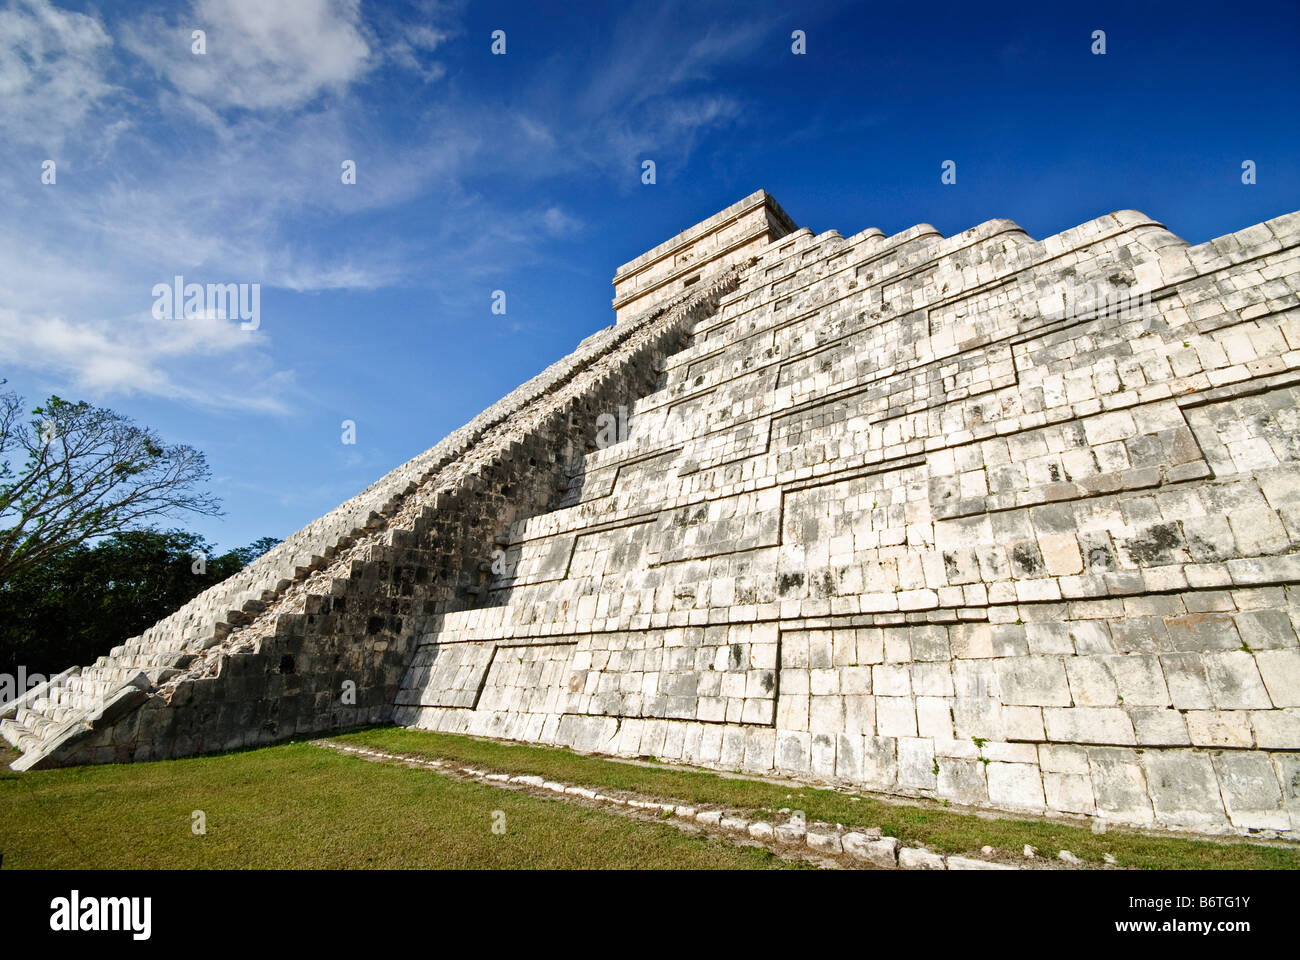 CHICHEN ITZA, Mexico - El Castillo (also known as Temple of Kuklcan) at the ancient Mayan ruins at Chichen Itza, Yucatan, Mexico 081216092714 1918x.tif Stock Photo